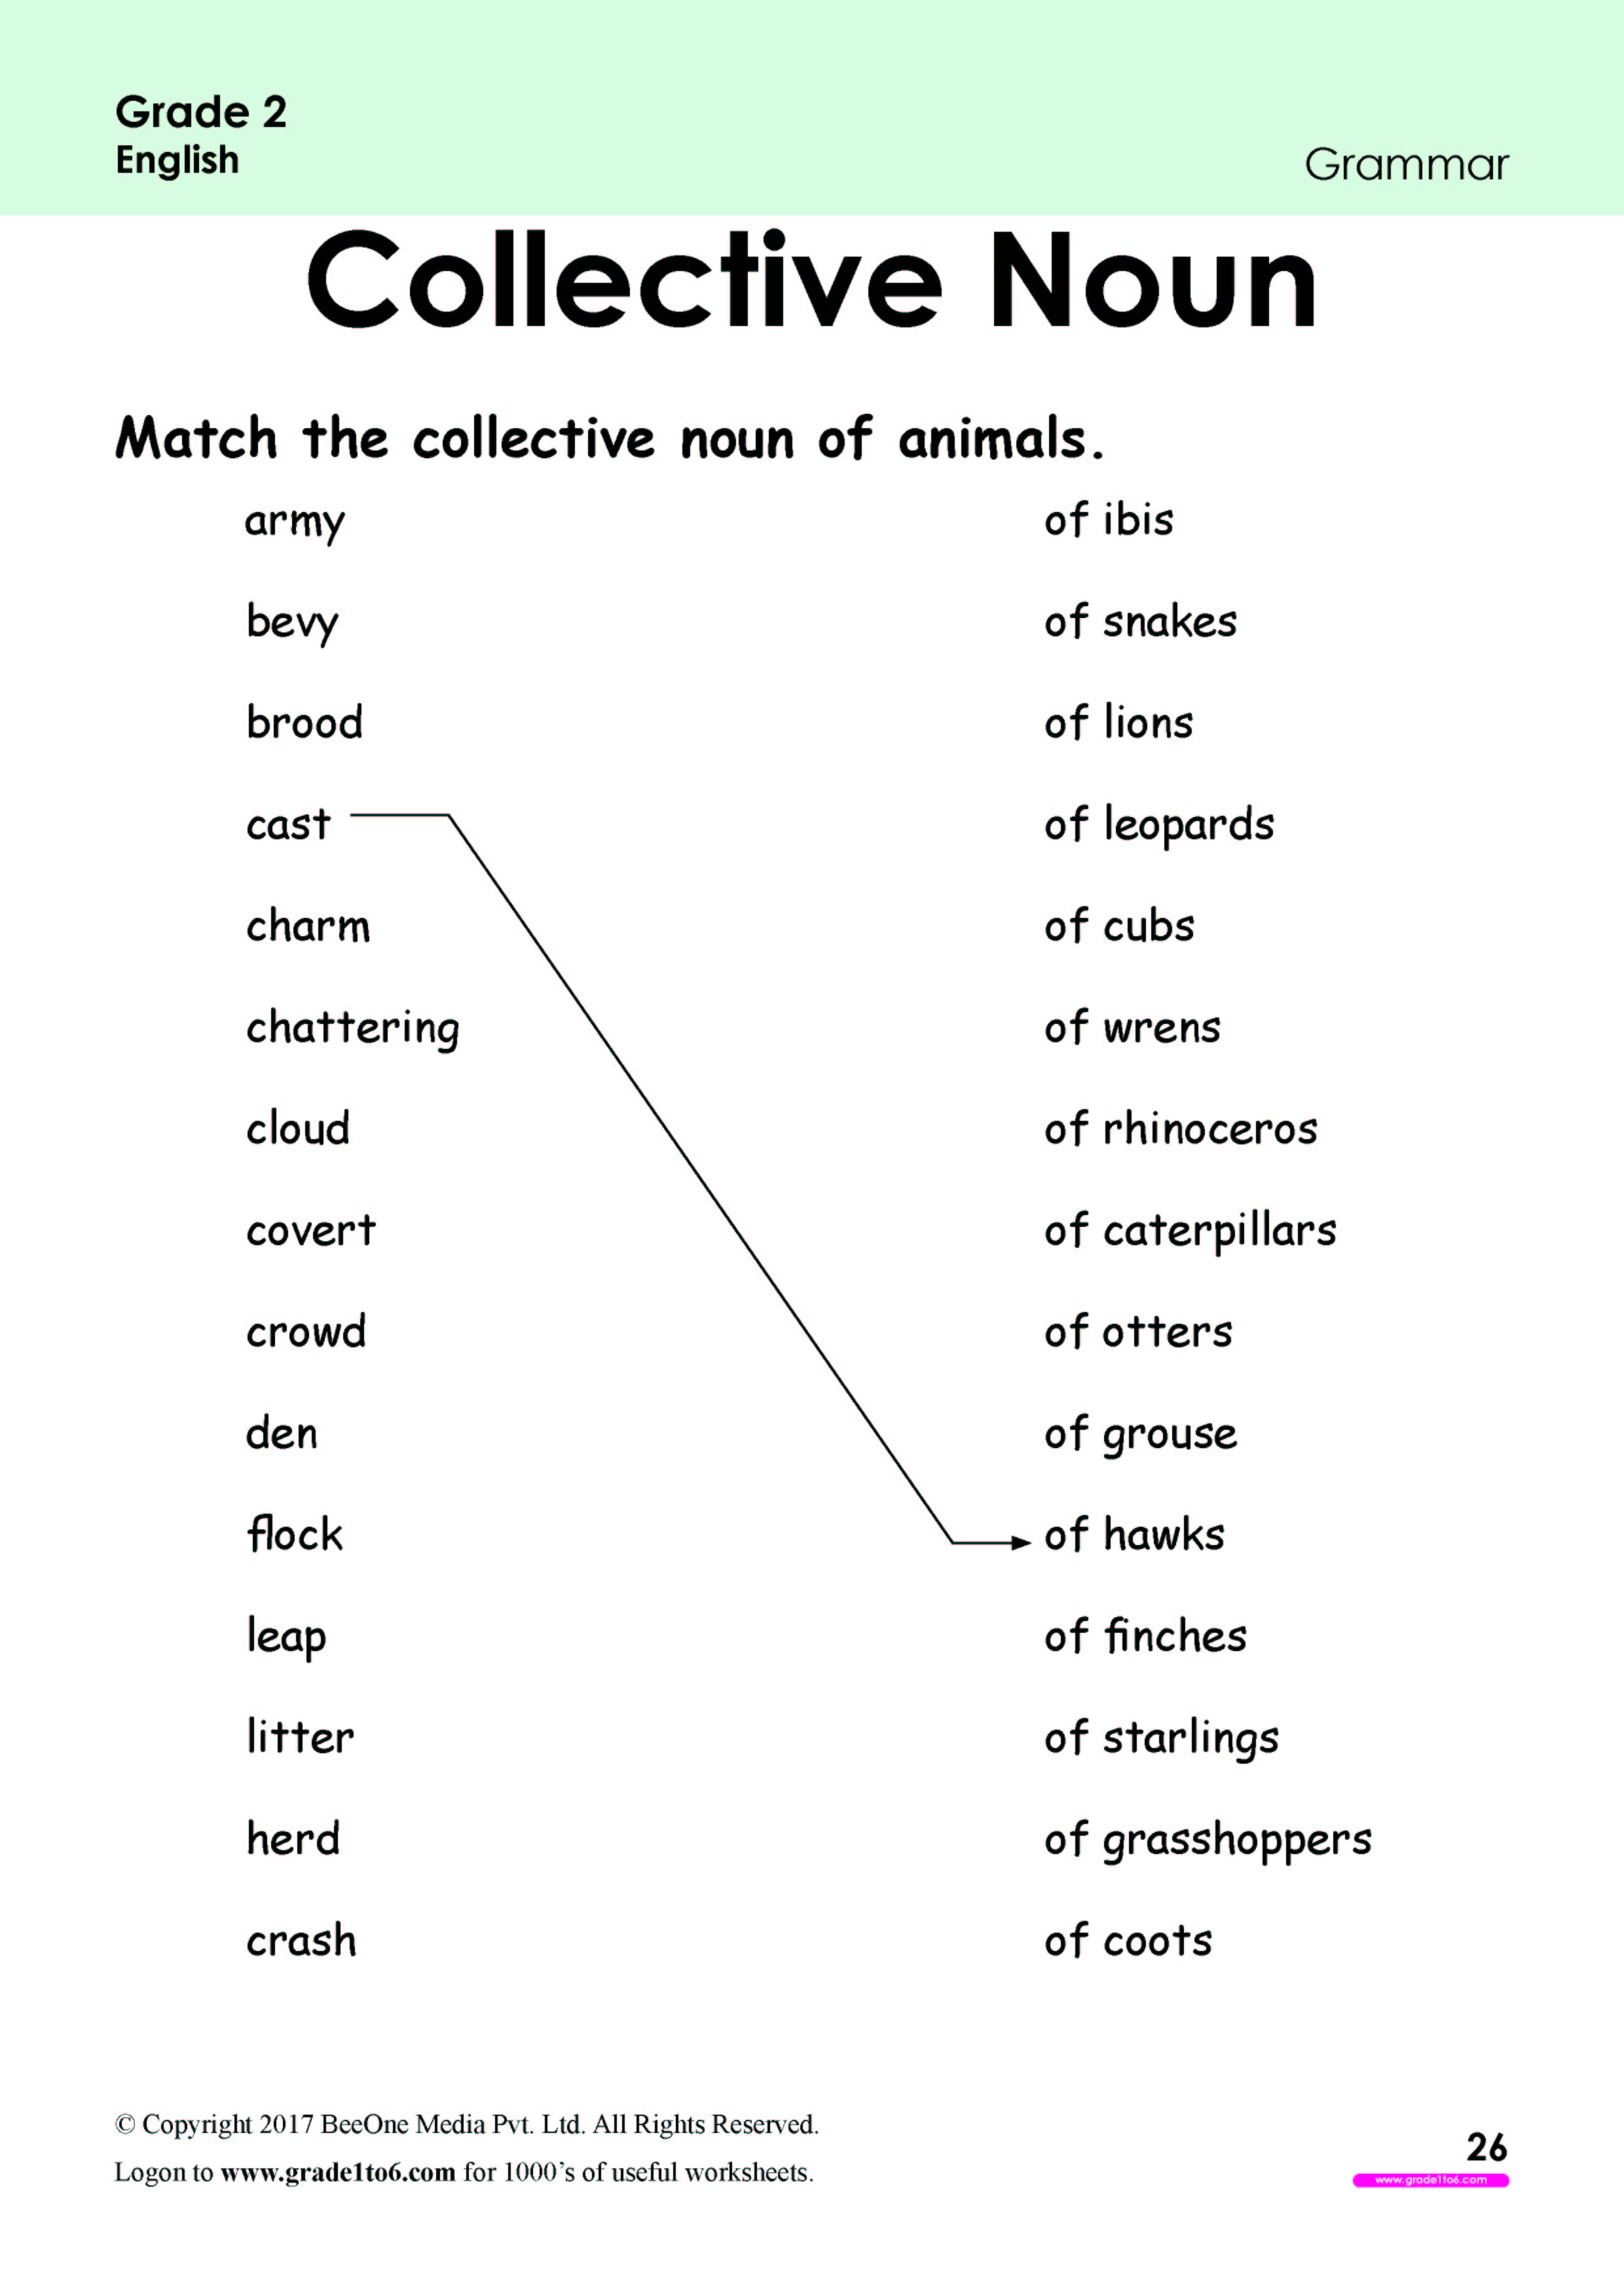 Collective Nouns Matching Worksheet